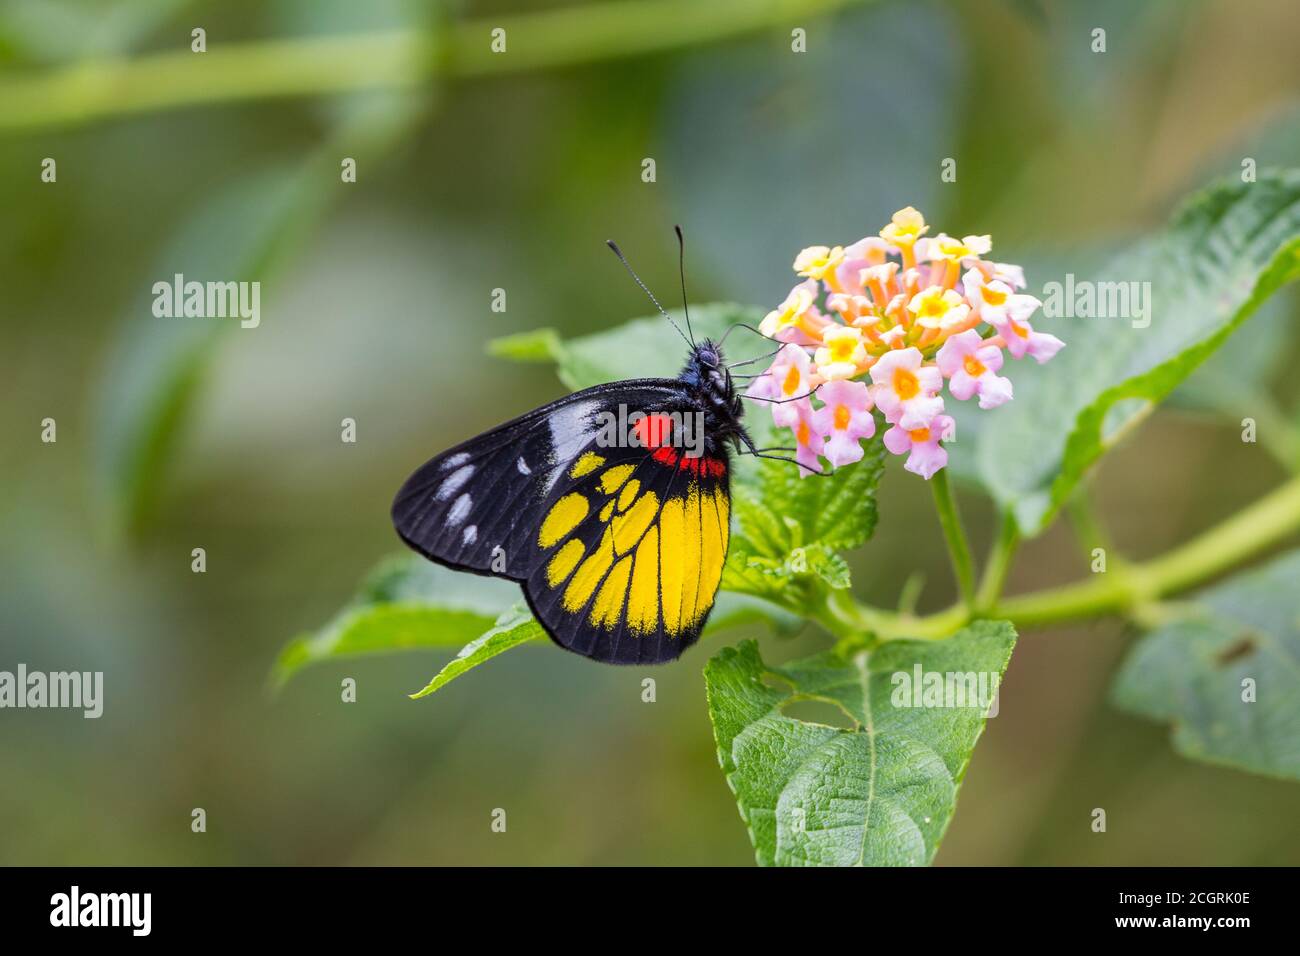 A butterfly on a flower feeding on nectar Stock Photo